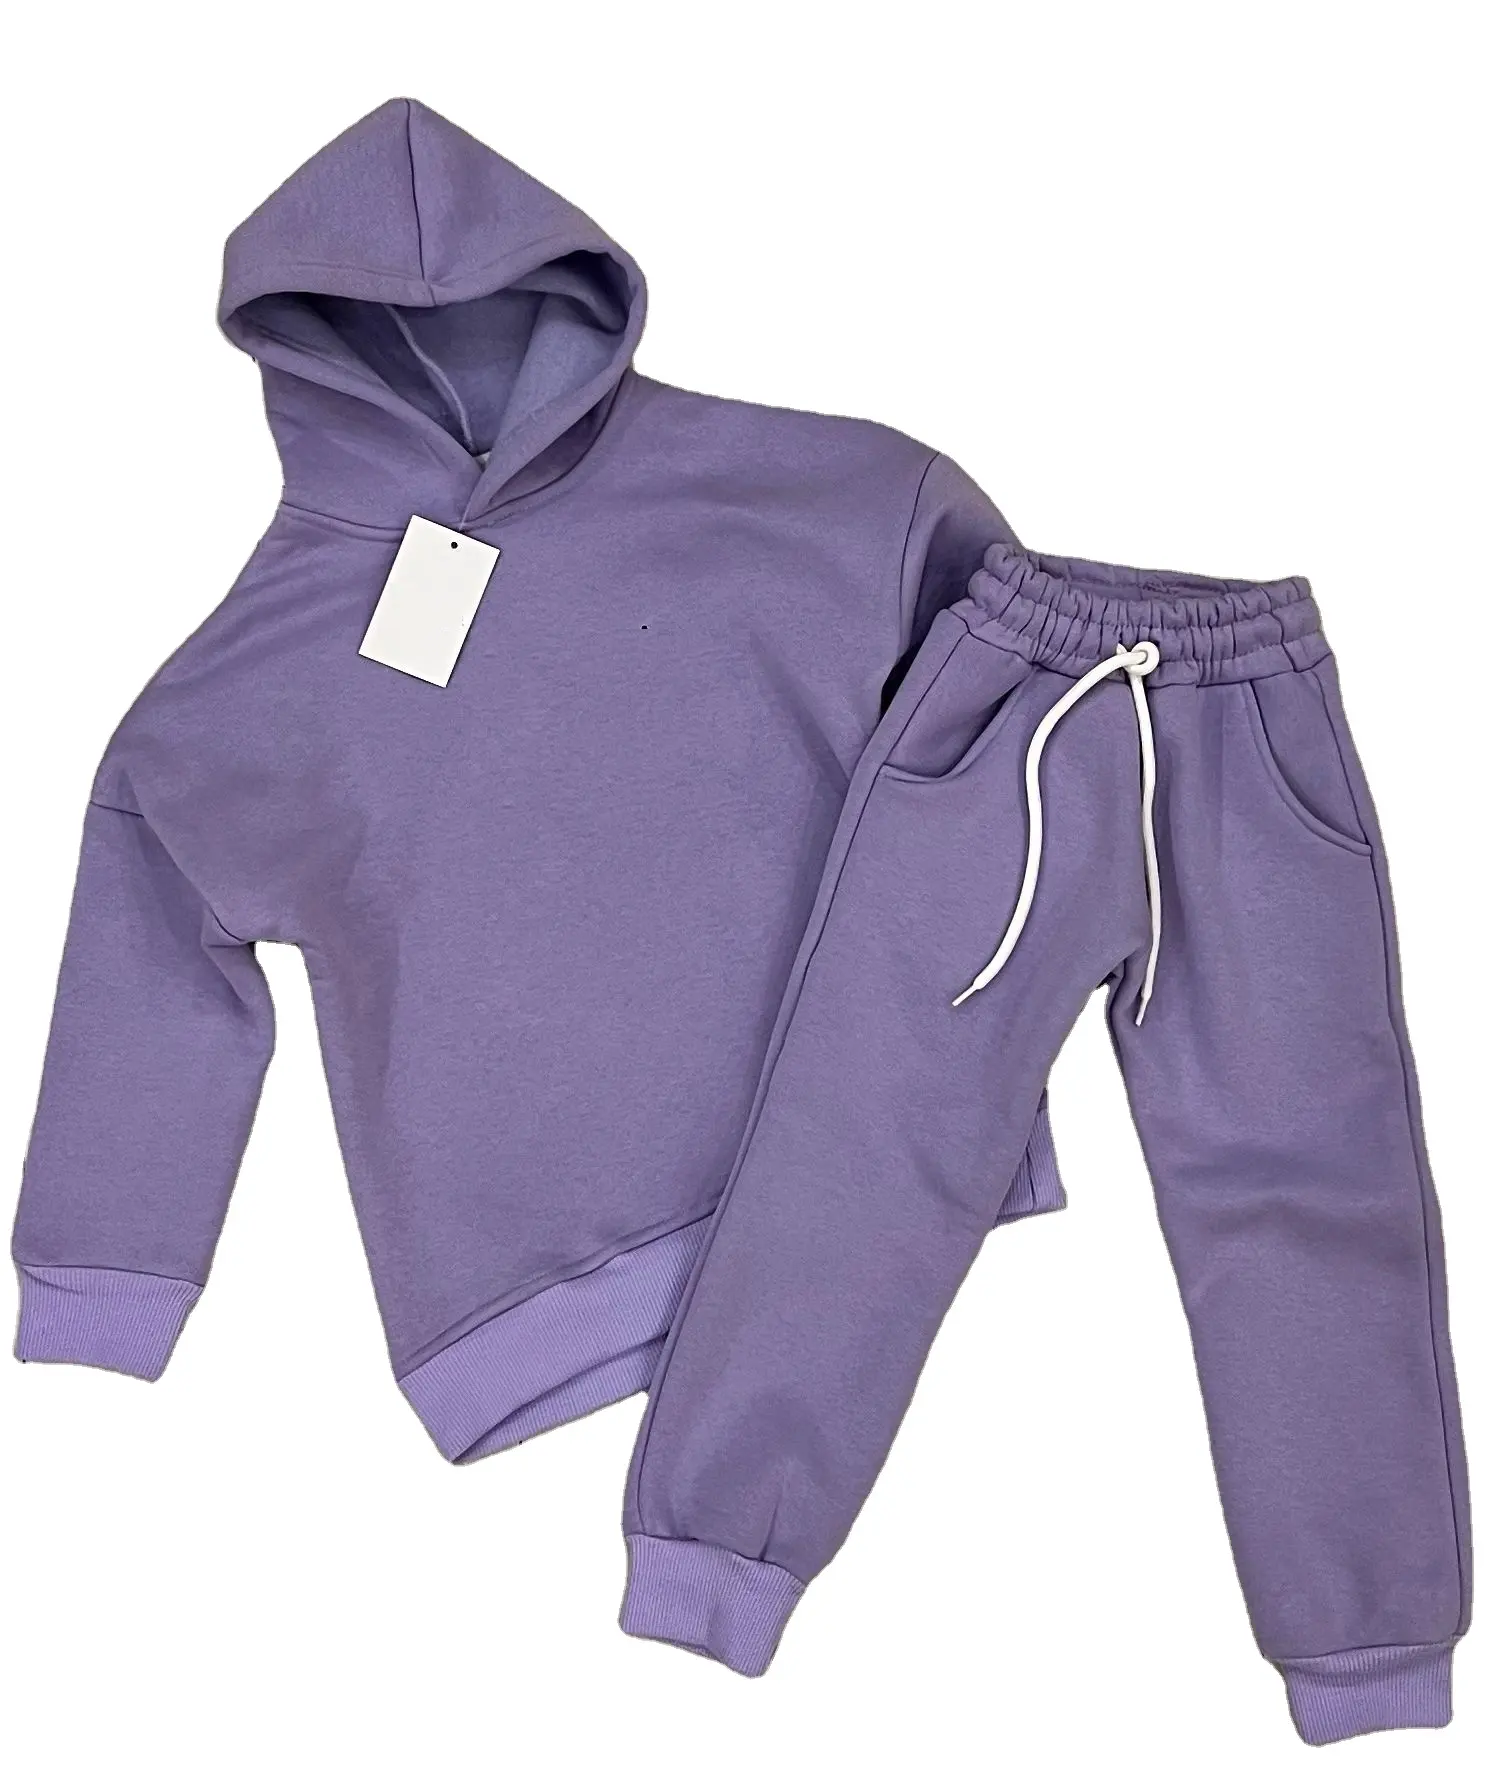 Set Hoodie dan Jogger anak-anak ukuran besar warna ungu untuk musim dingin kain katun lembut pilihan warna dibuat di Turki